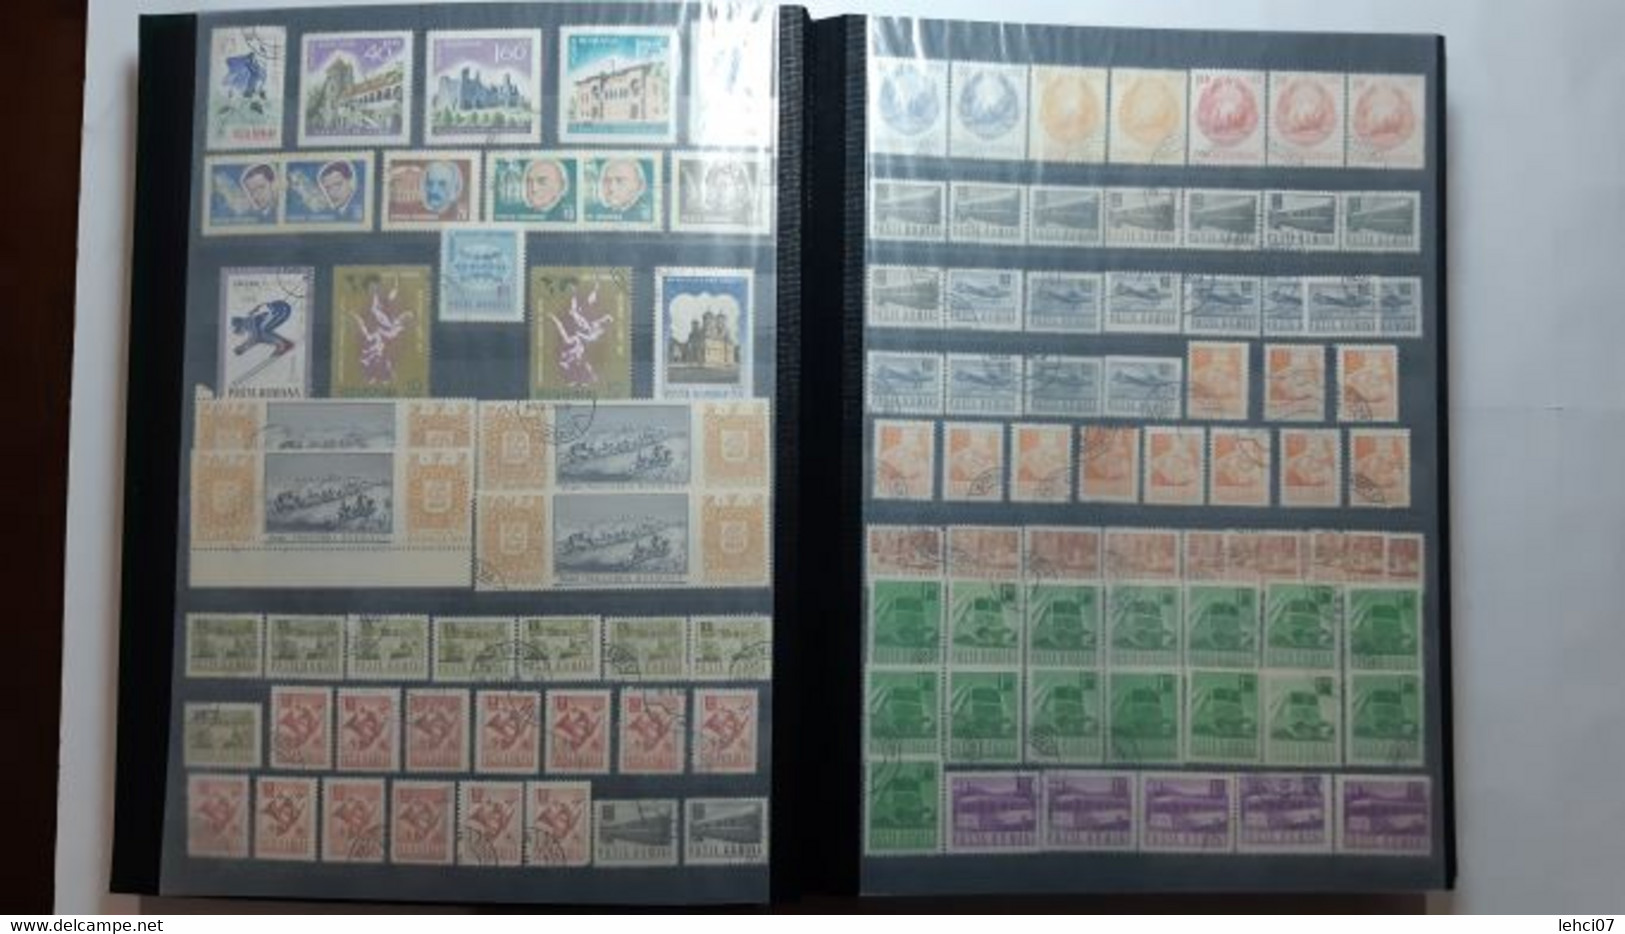 ROUMANIE Intéressante collection importante, d’environ 2 080 timbres